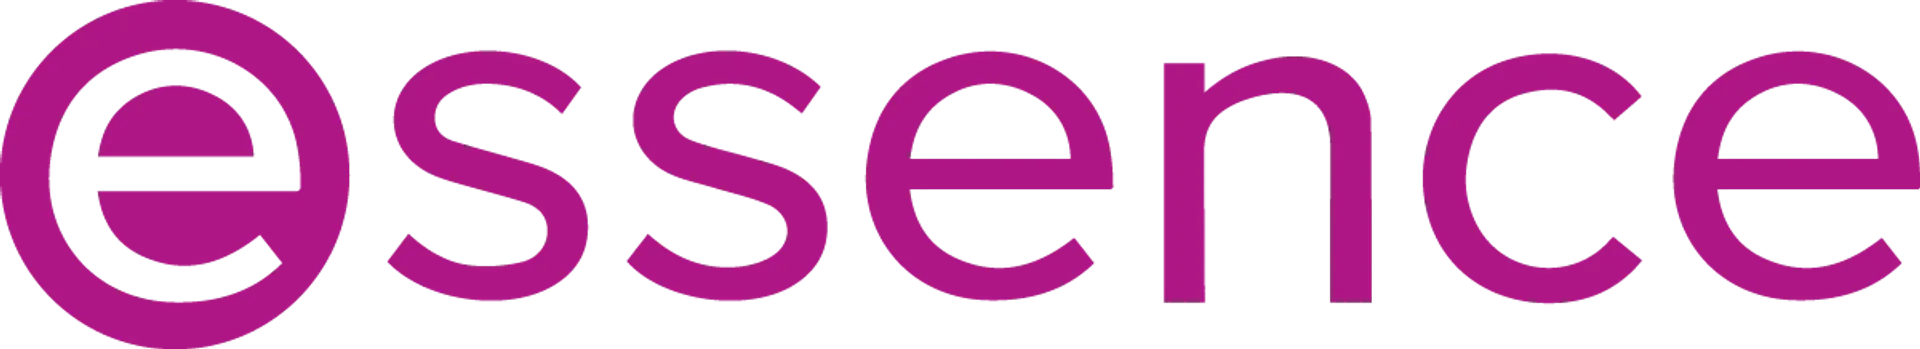 ESSENCE logo